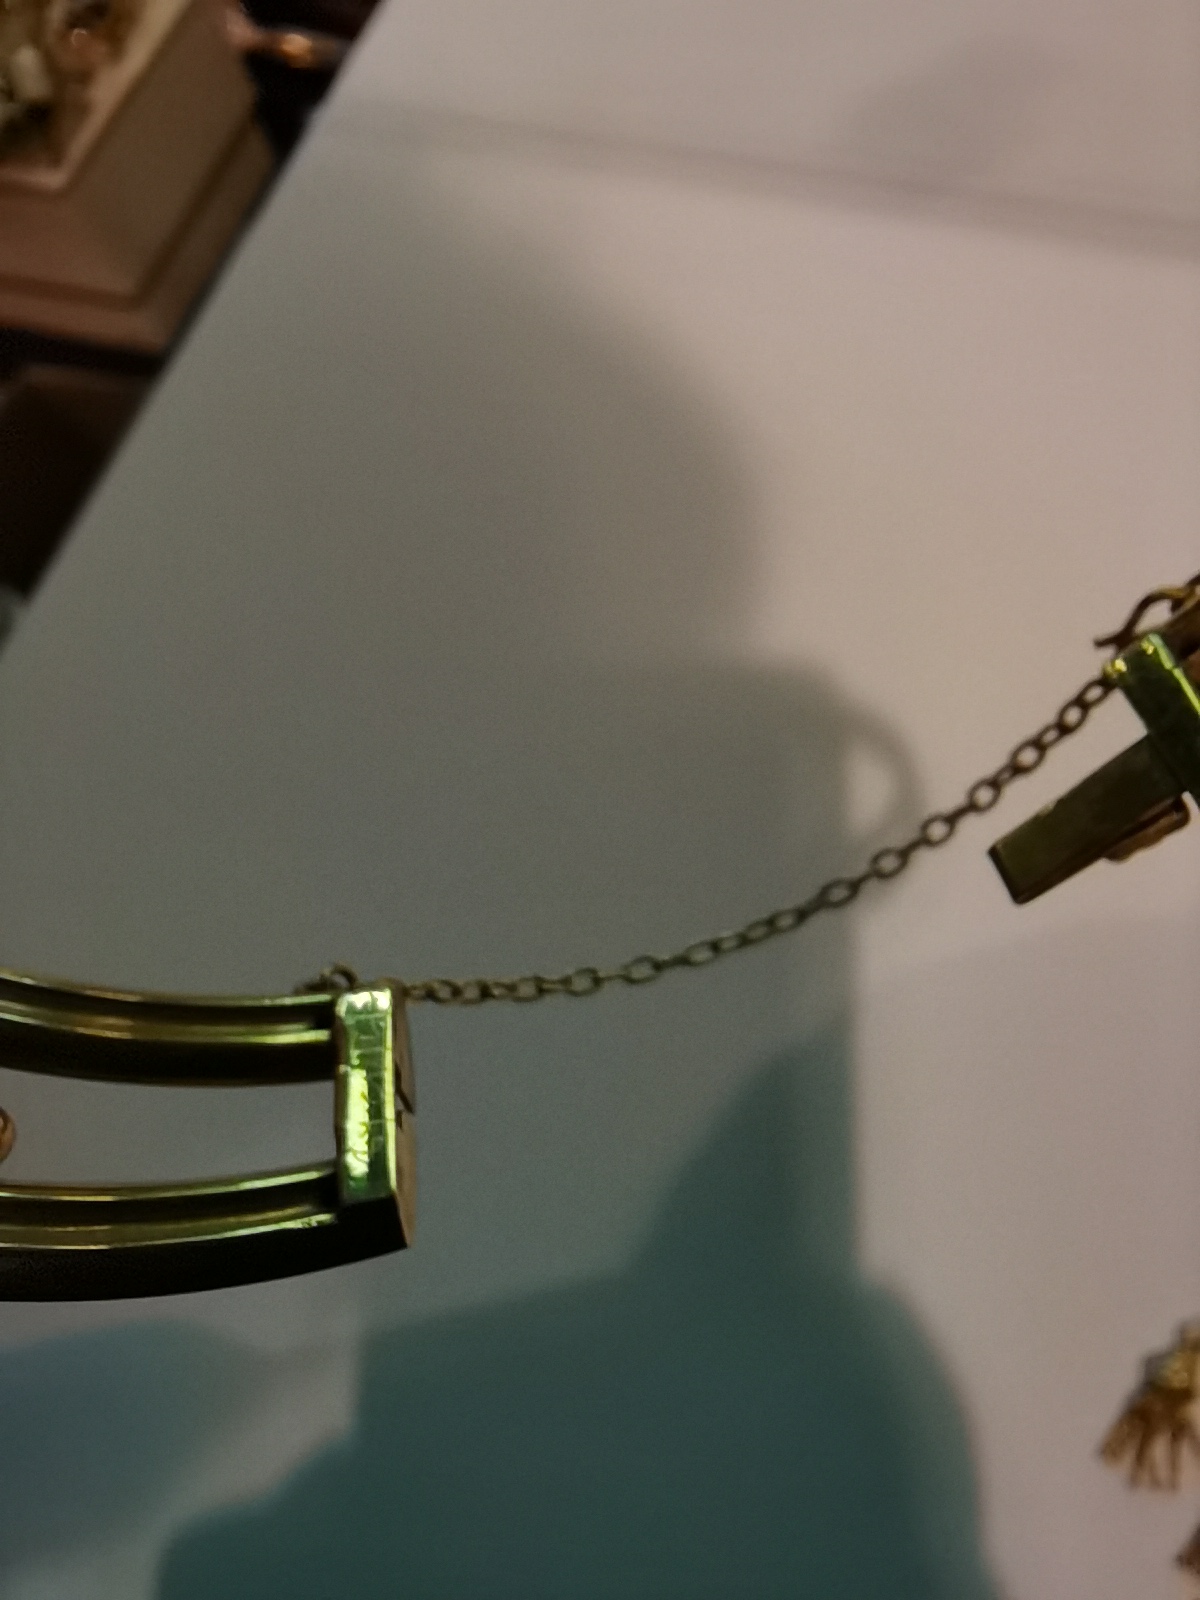 Gold costume set : Brooch 2 x bracelets, earrings, necklace etc 115g - Image 7 of 19